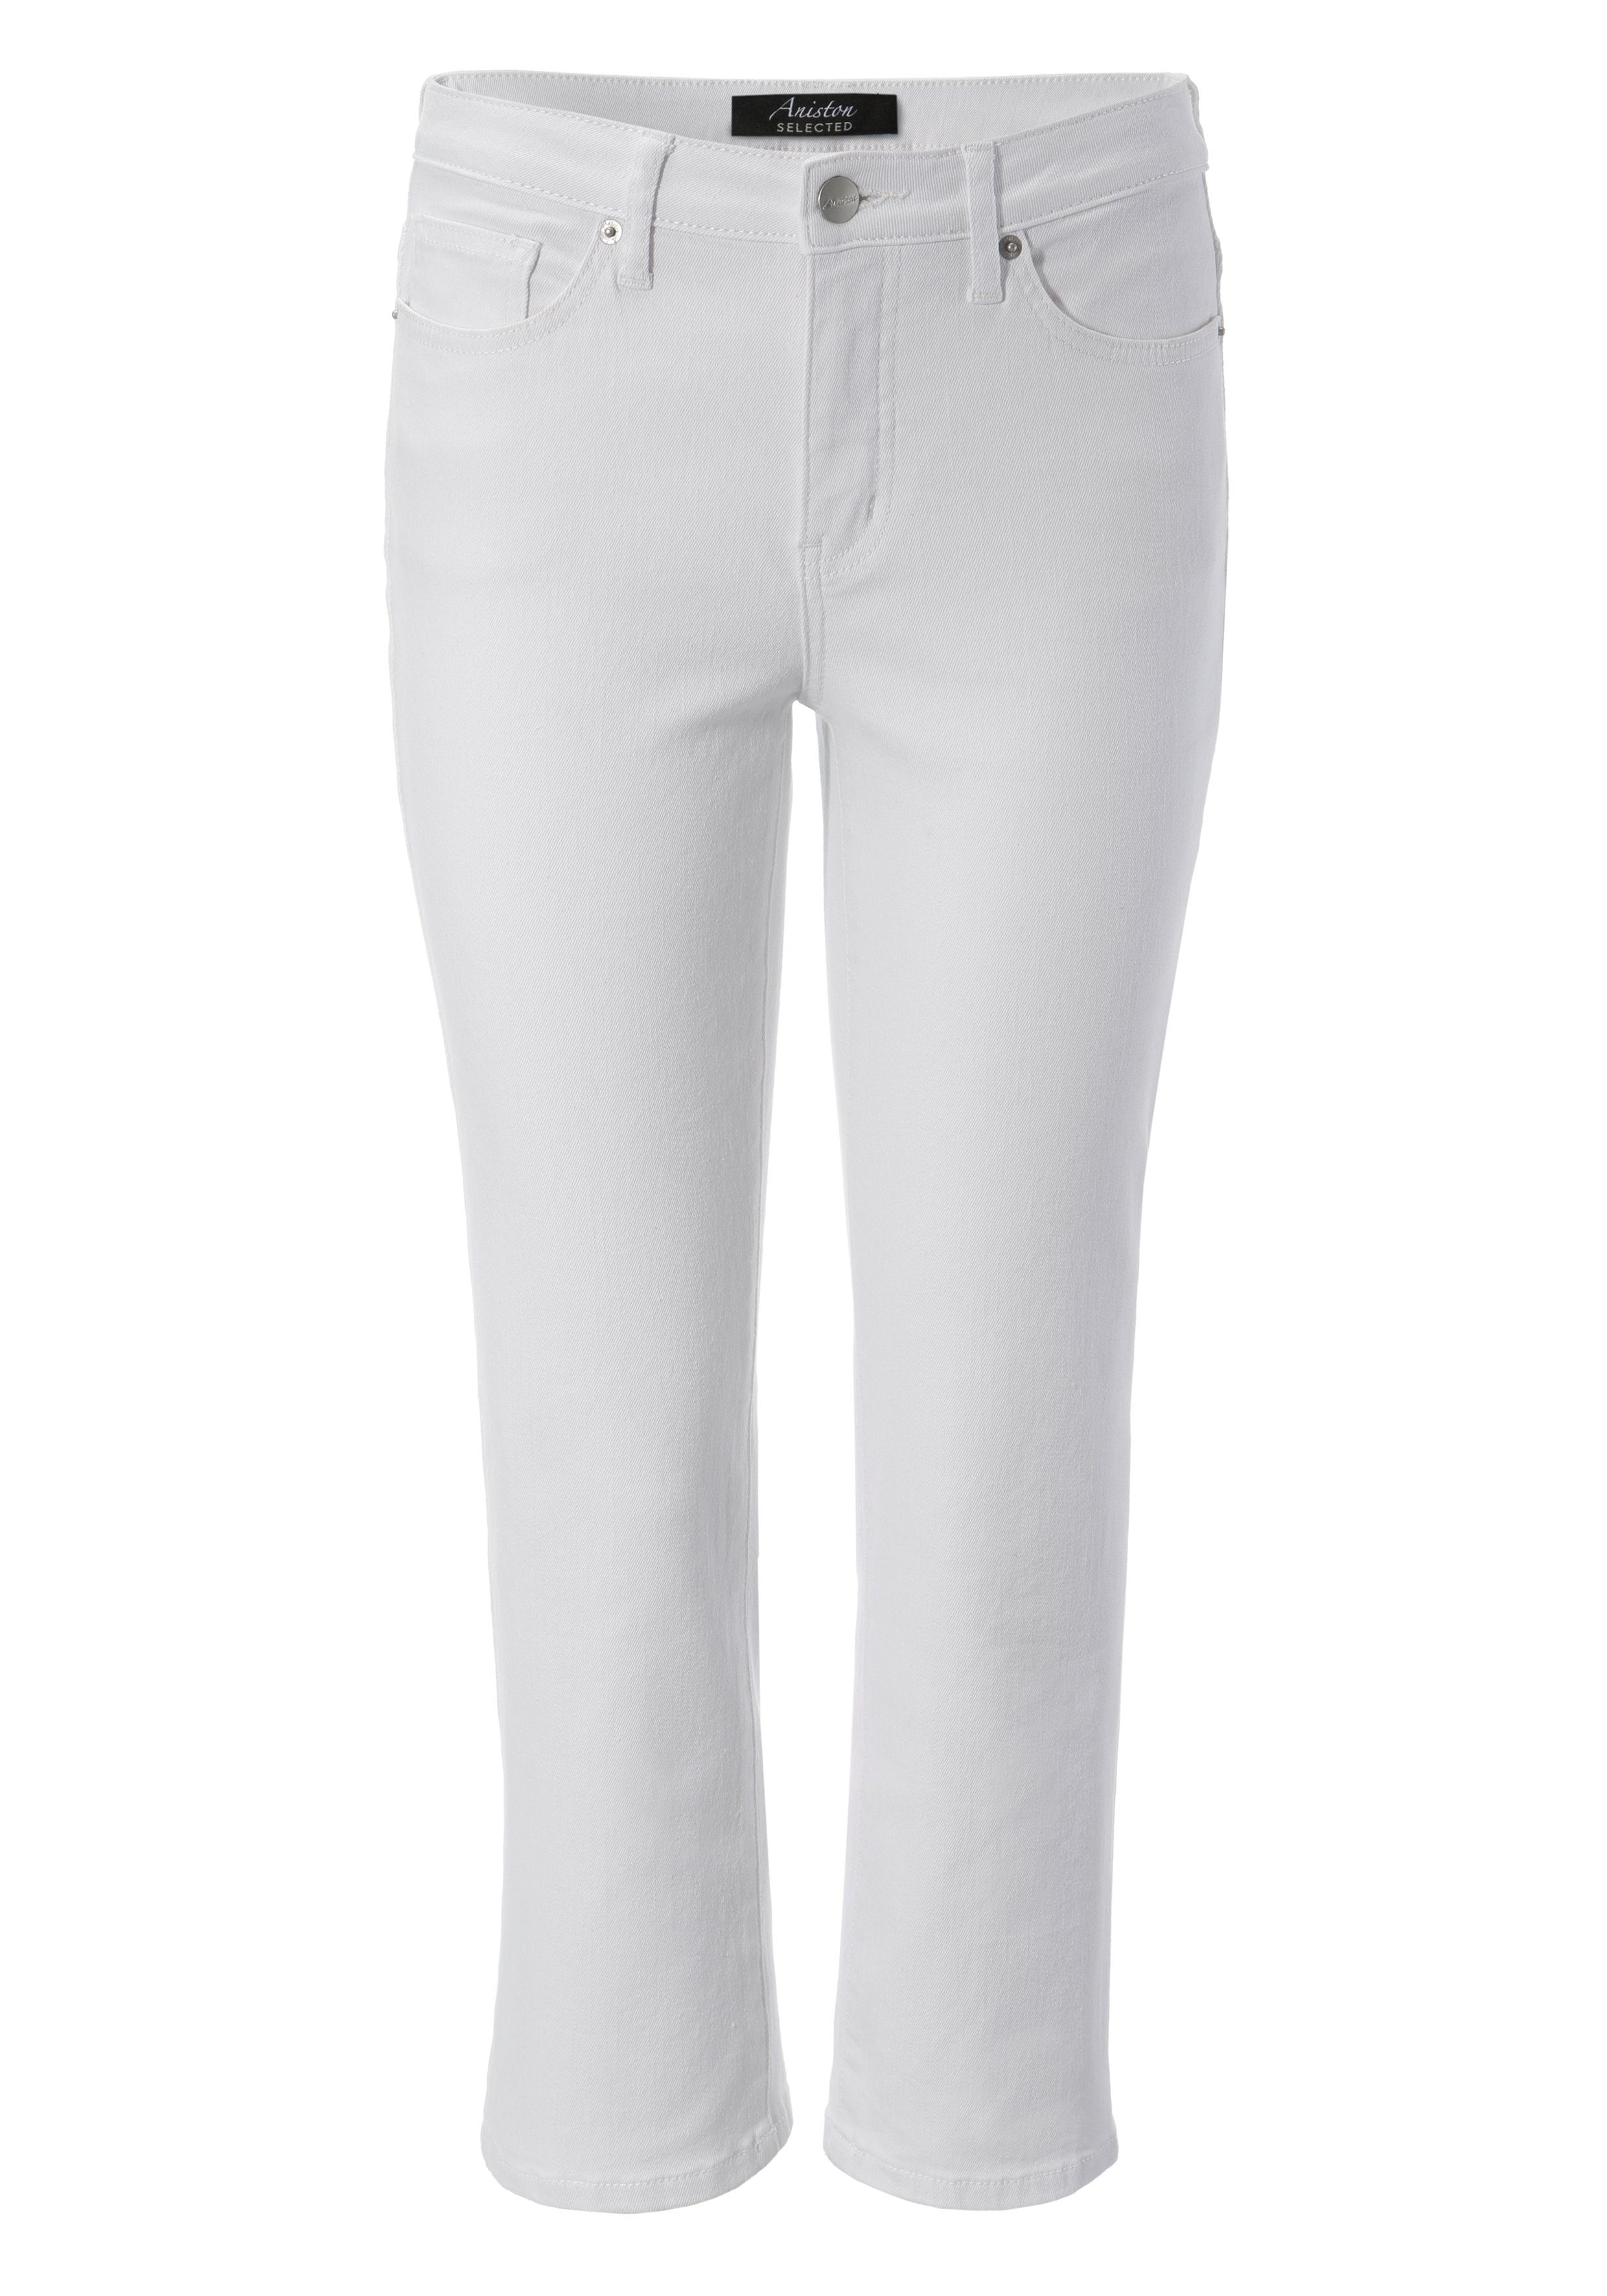 Aniston SELECTED Straight-Jeans in cropped verkürzter weiß Länge